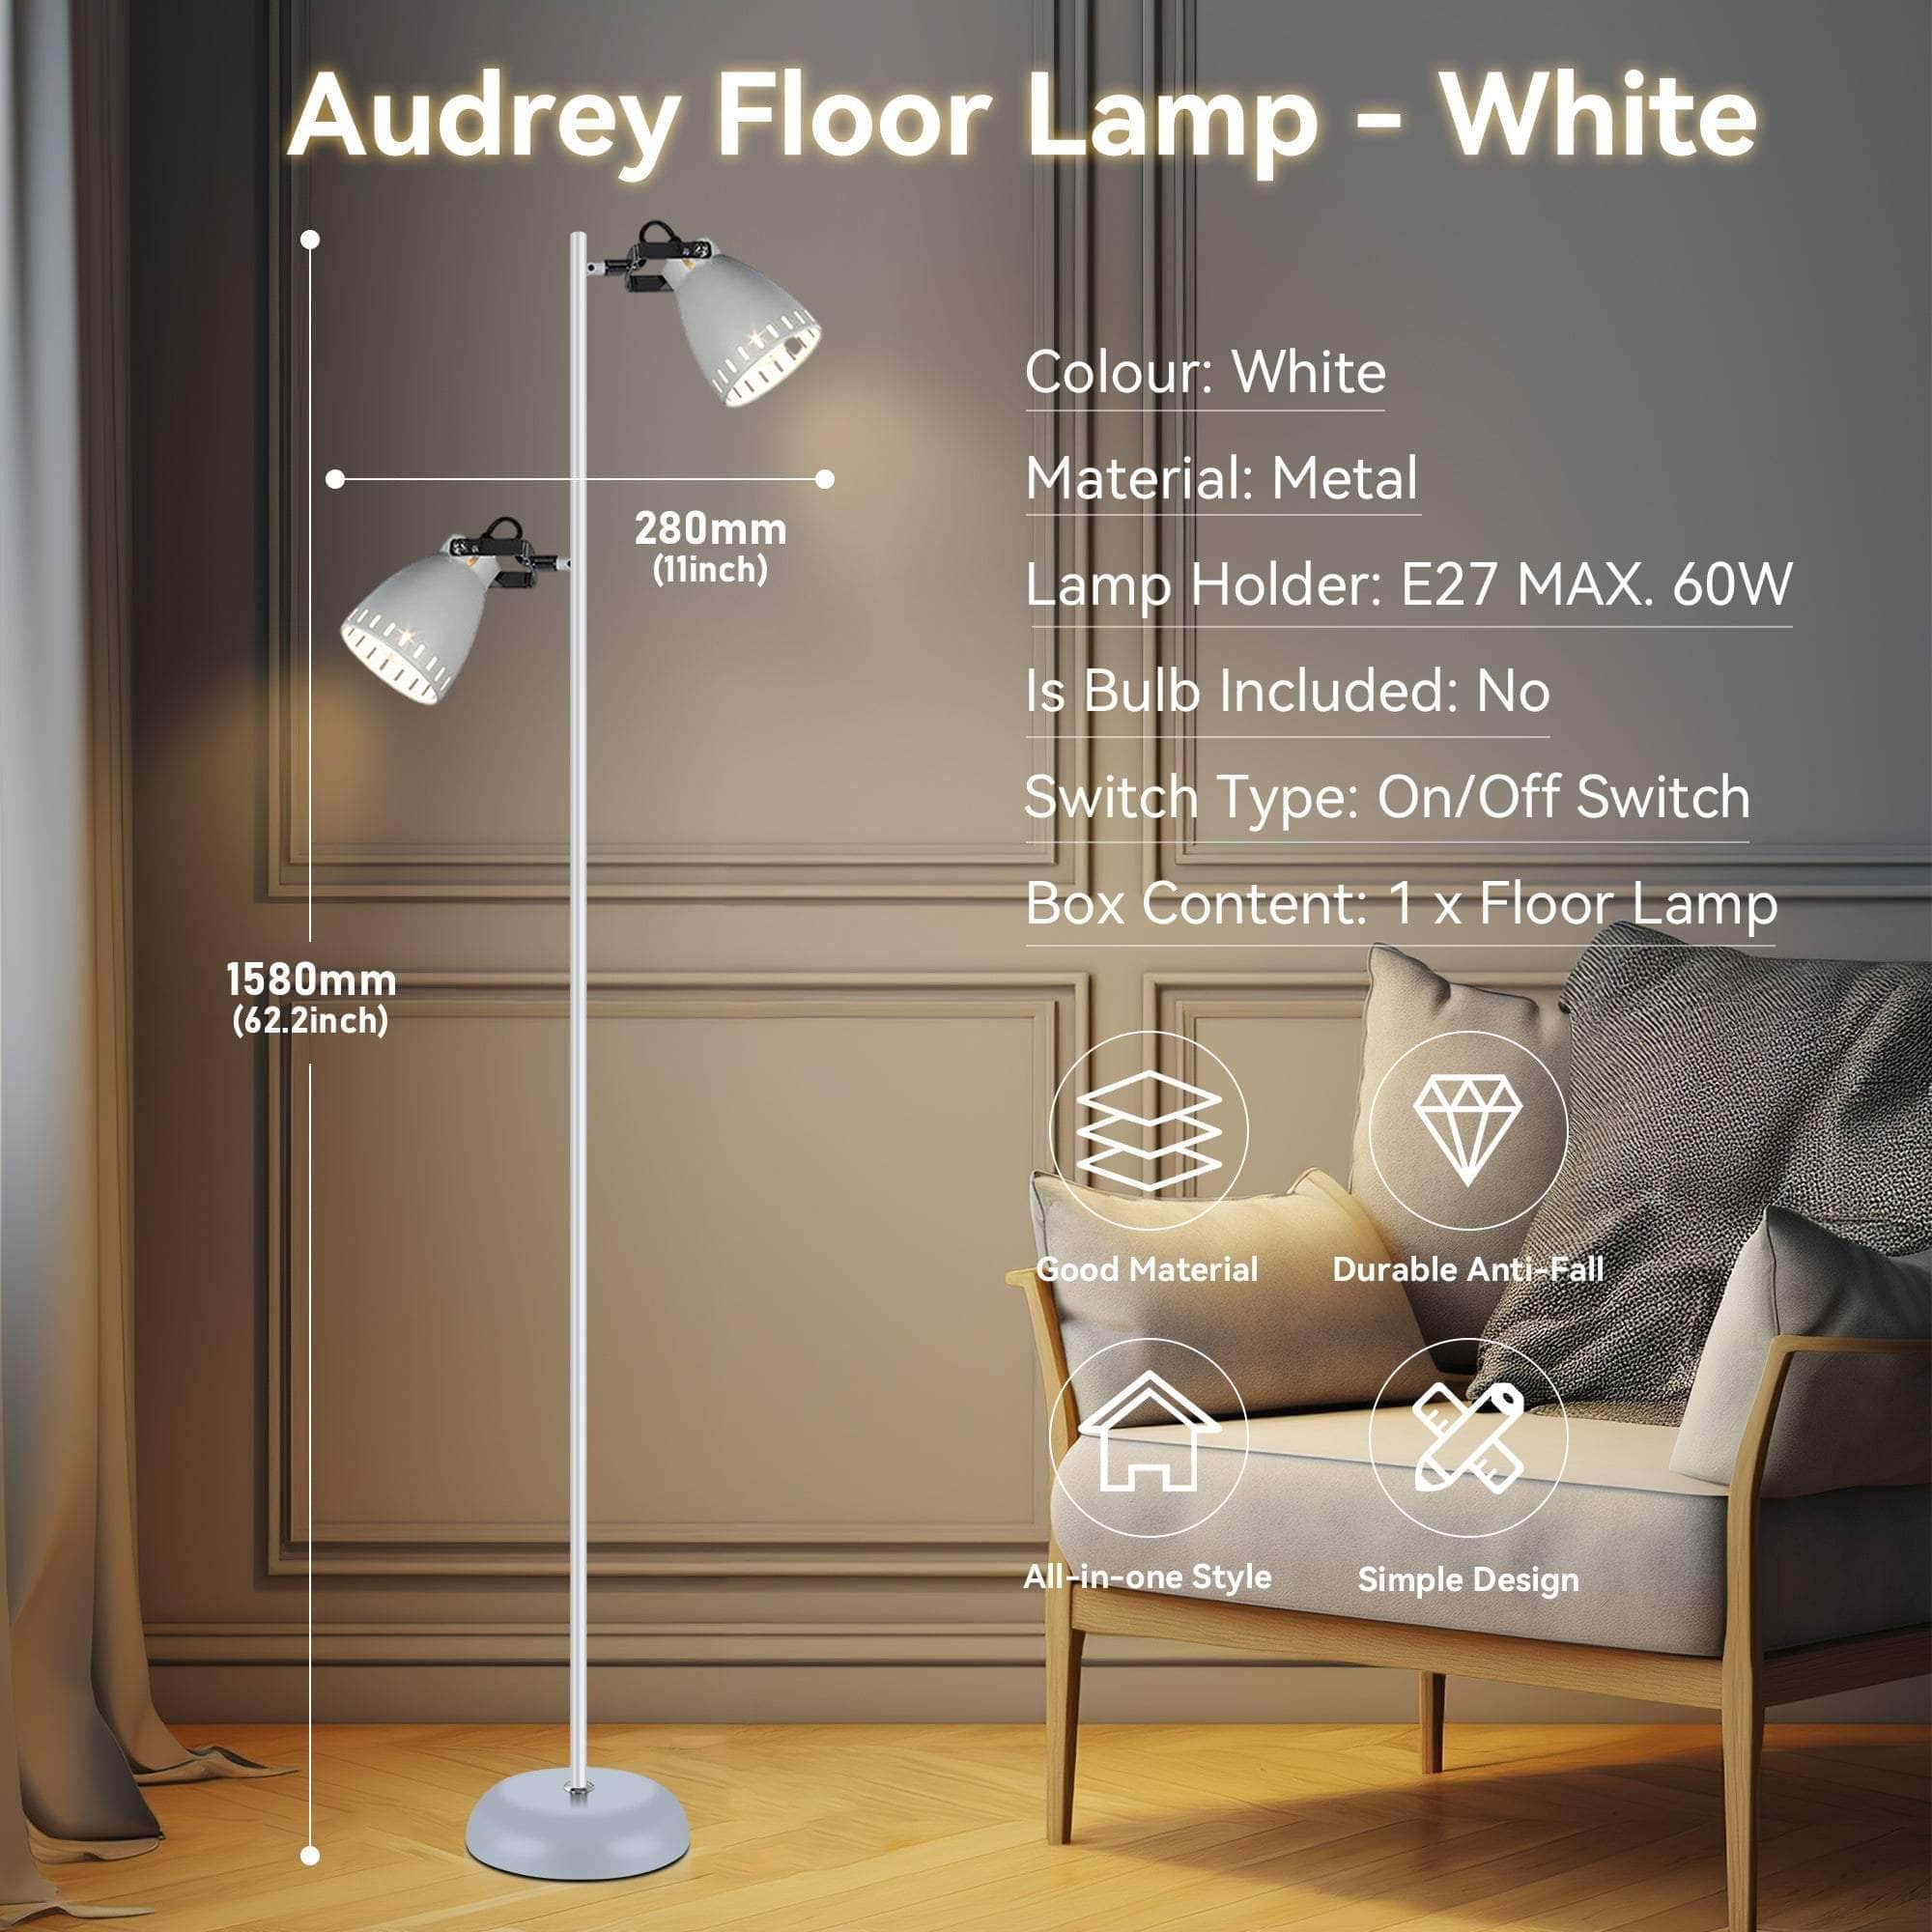 Audrey Floor Lamp - White